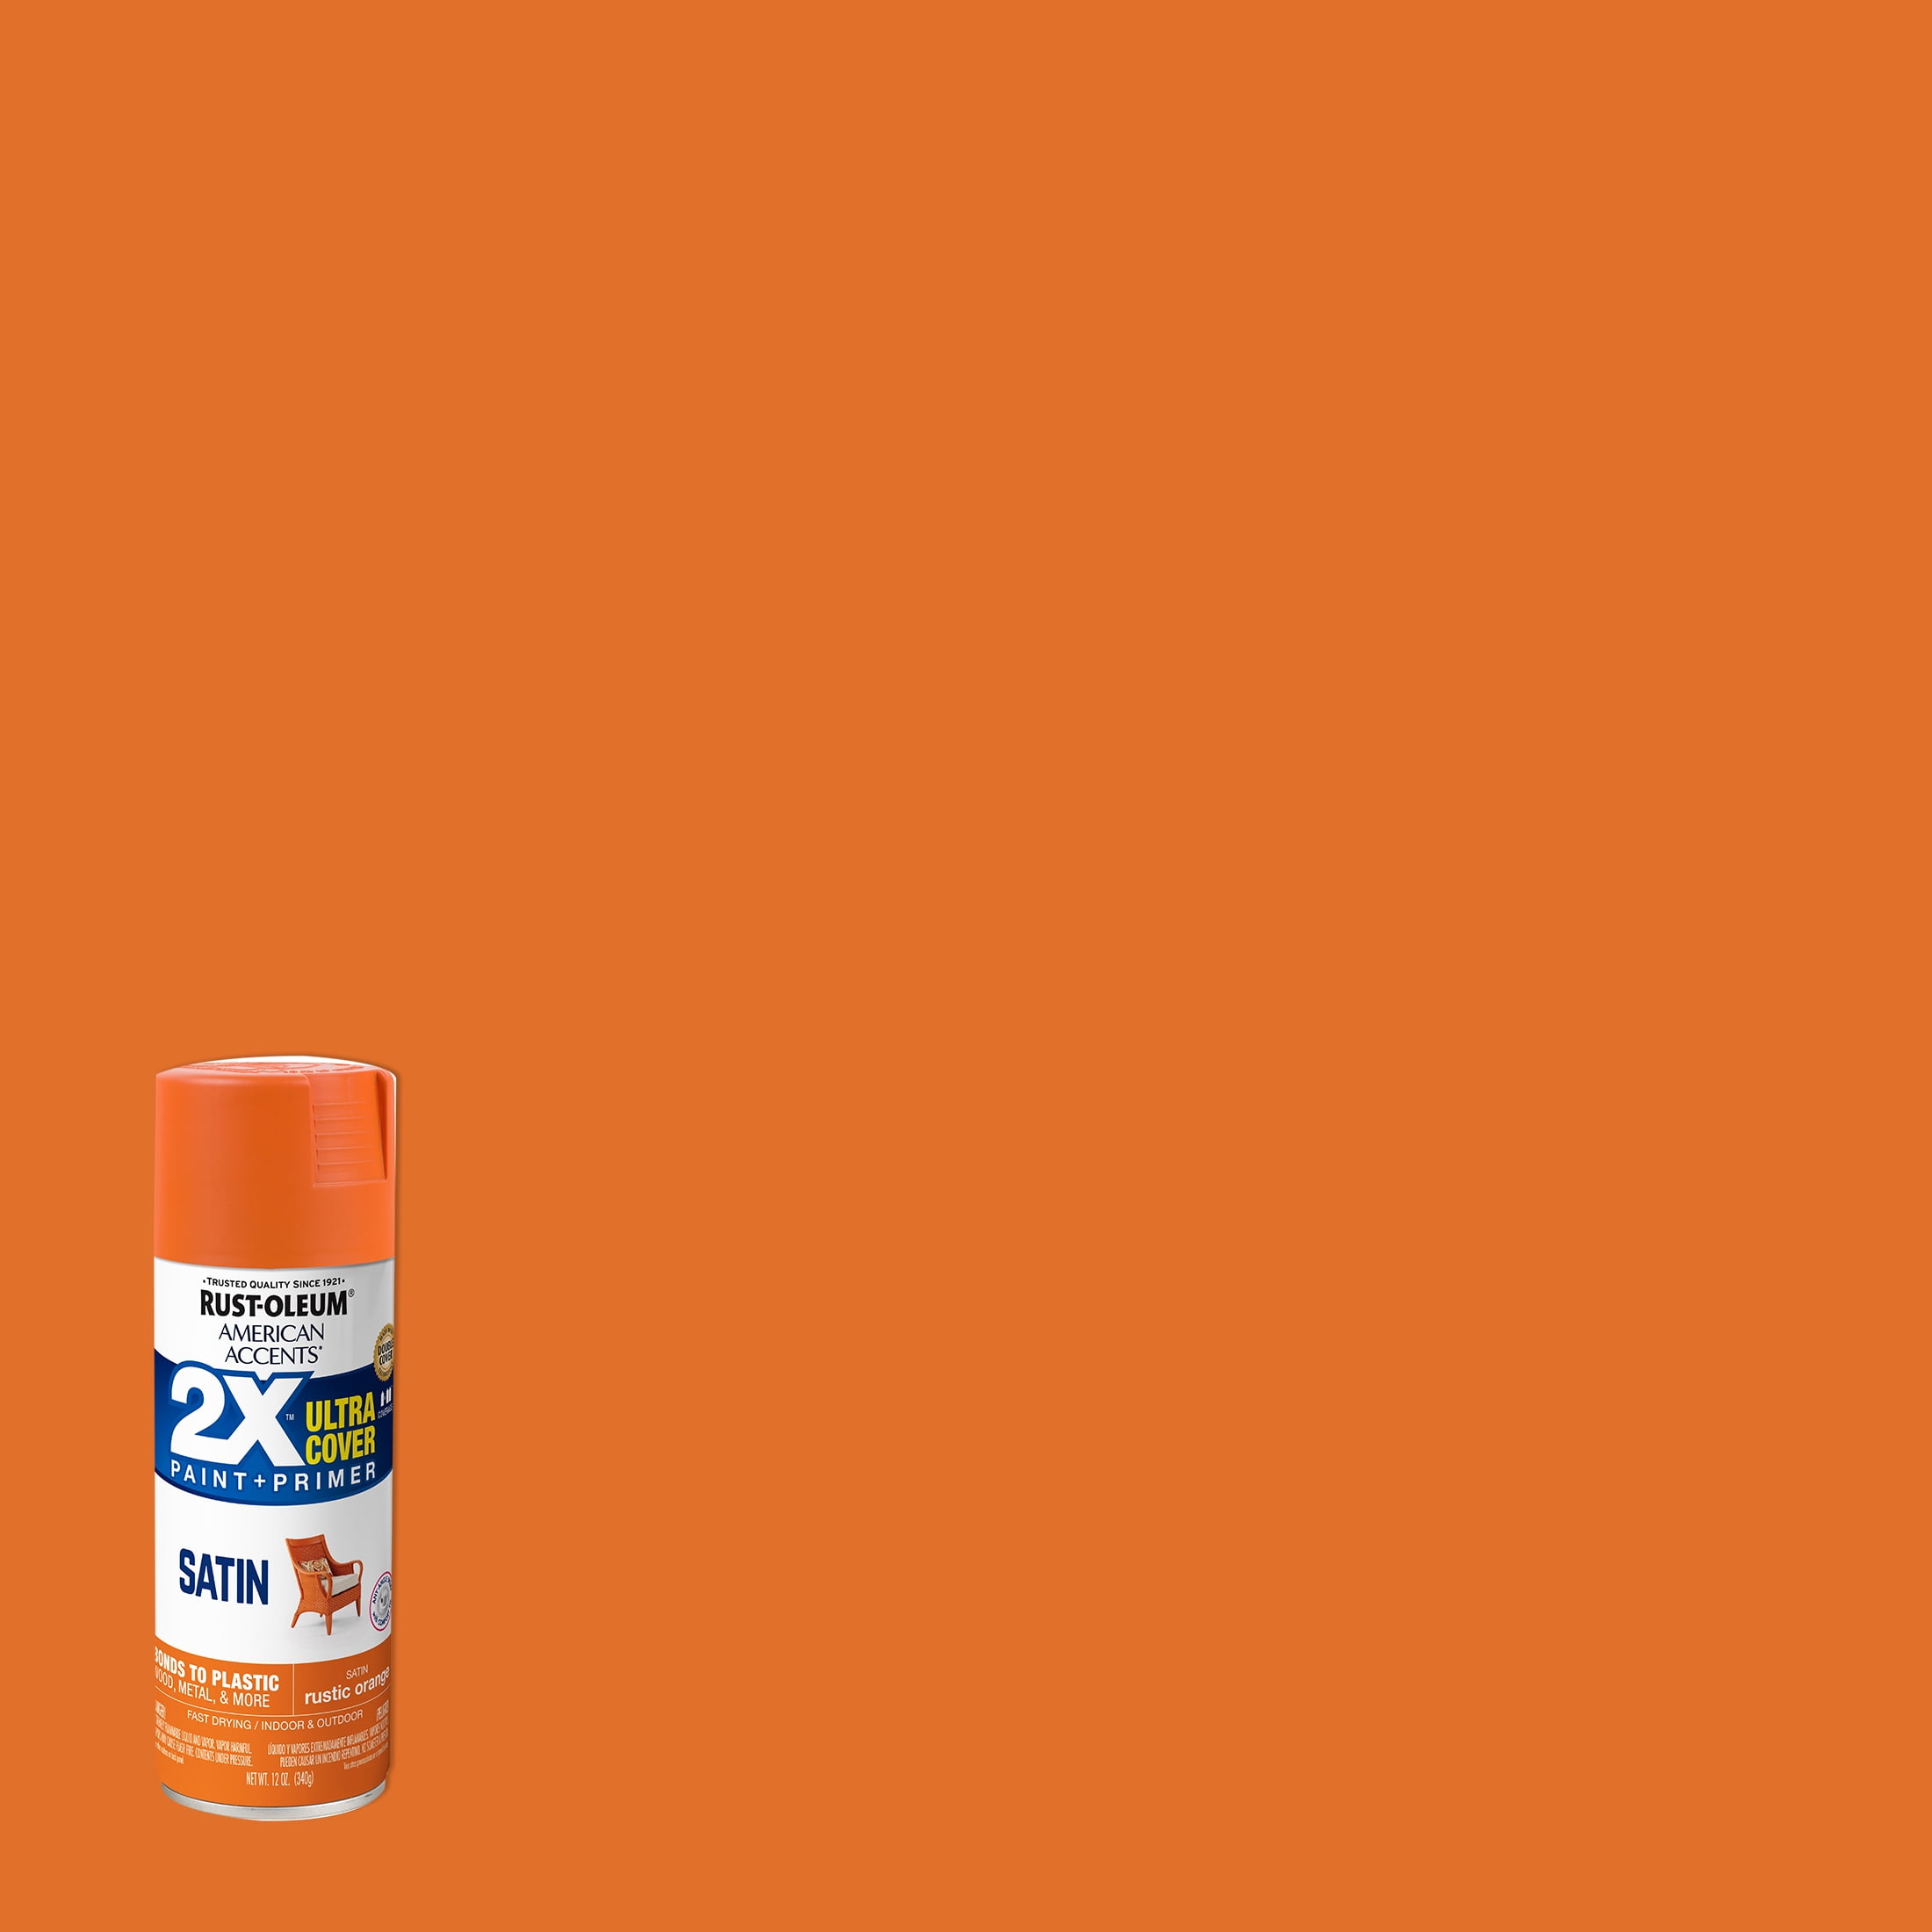 Rustic Orange, Rust-Oleum American Accents 2X Ultra Cover Satin Spray Paint- 12 oz